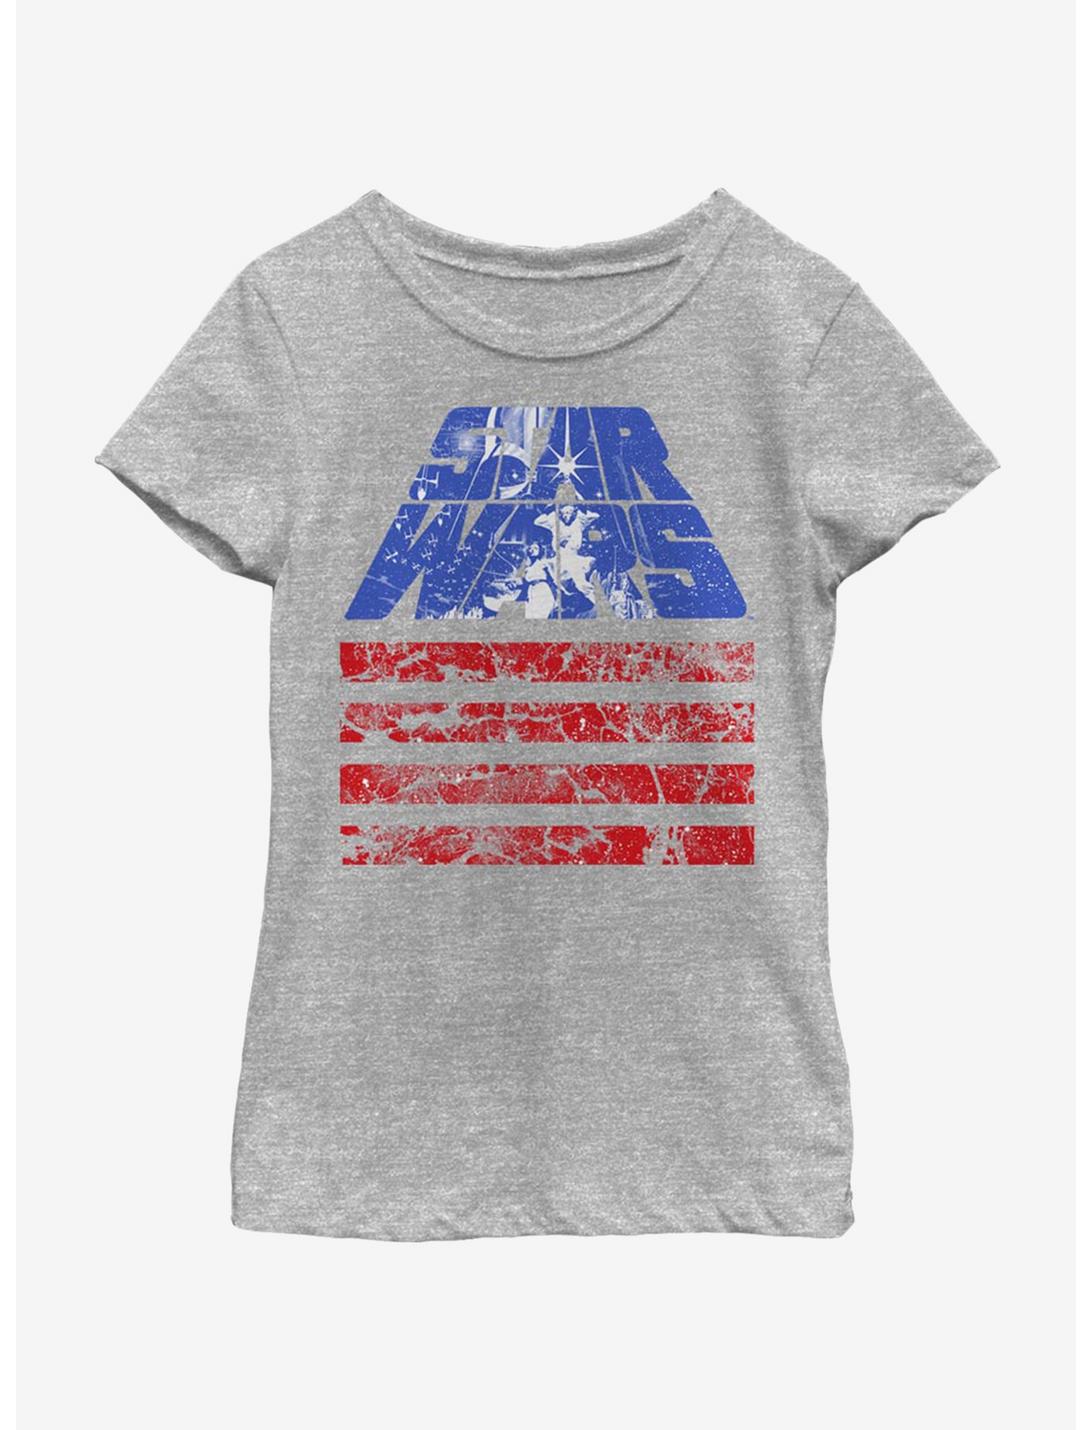 Star Wars Star Glory Youth Girls T-Shirt, ATH HTR, hi-res